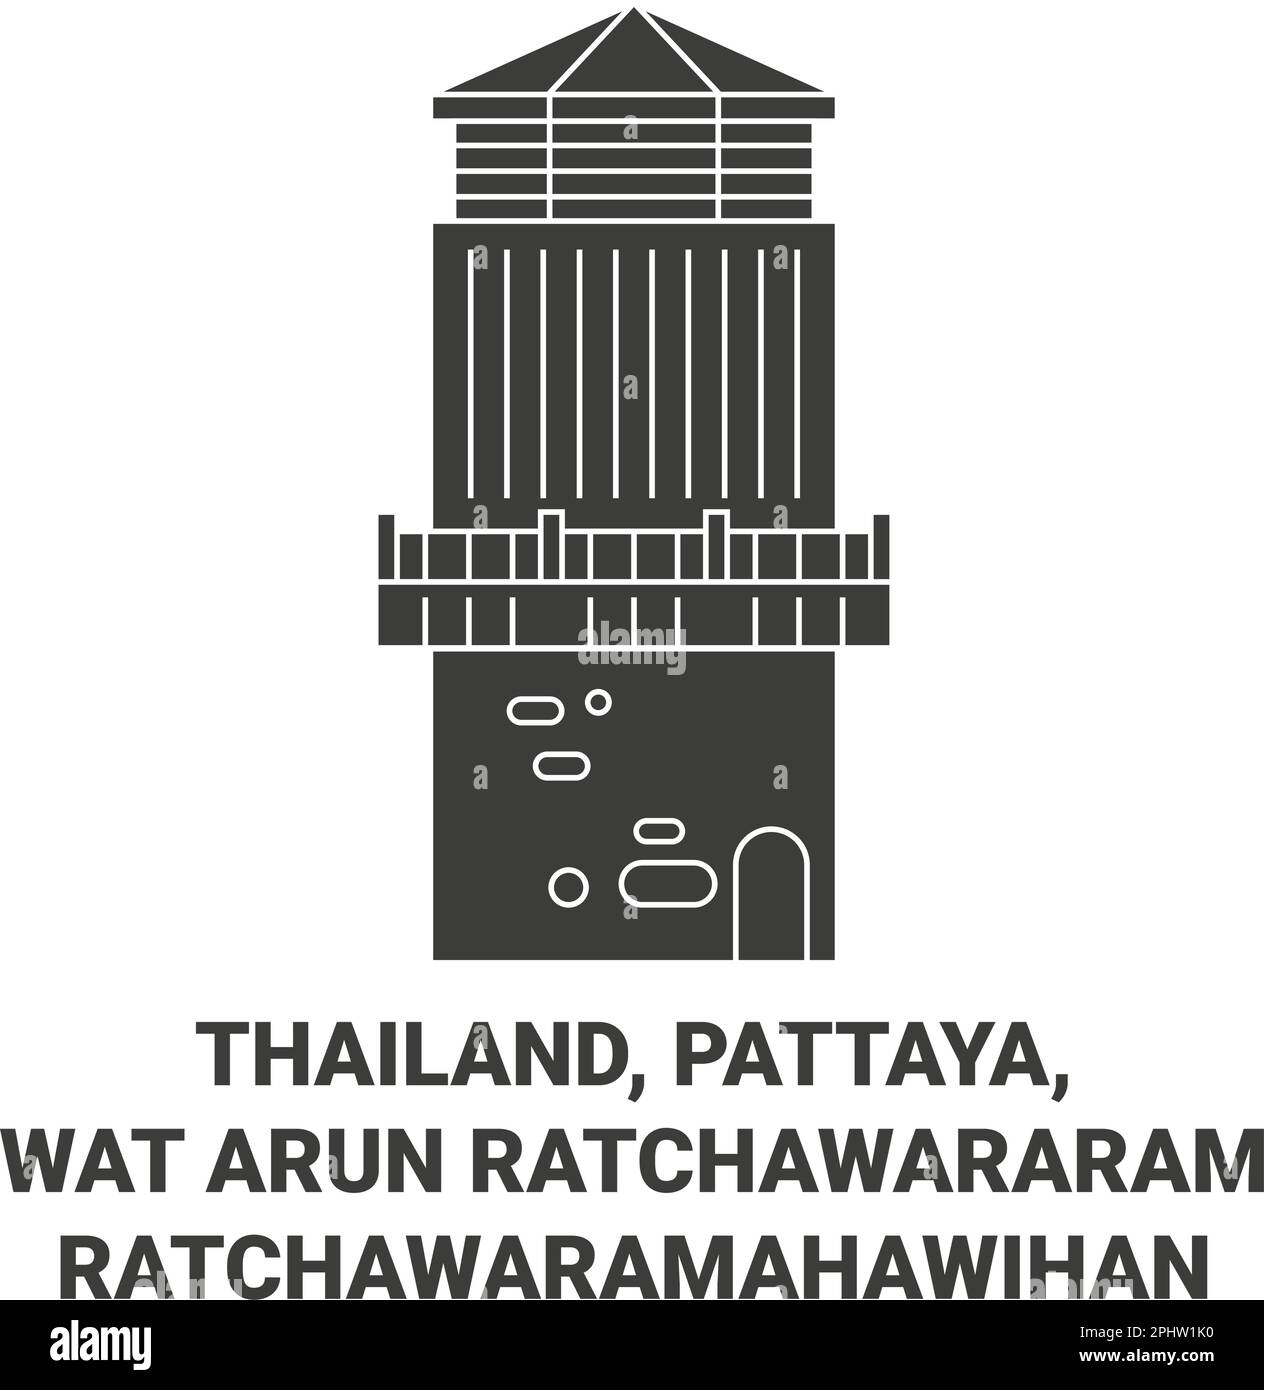 Thailand, Pattaya, Wat Arun Ratchawararam Ratchawaramahawihan Reise Wahrzeichen Vektordarstellung Stock Vektor